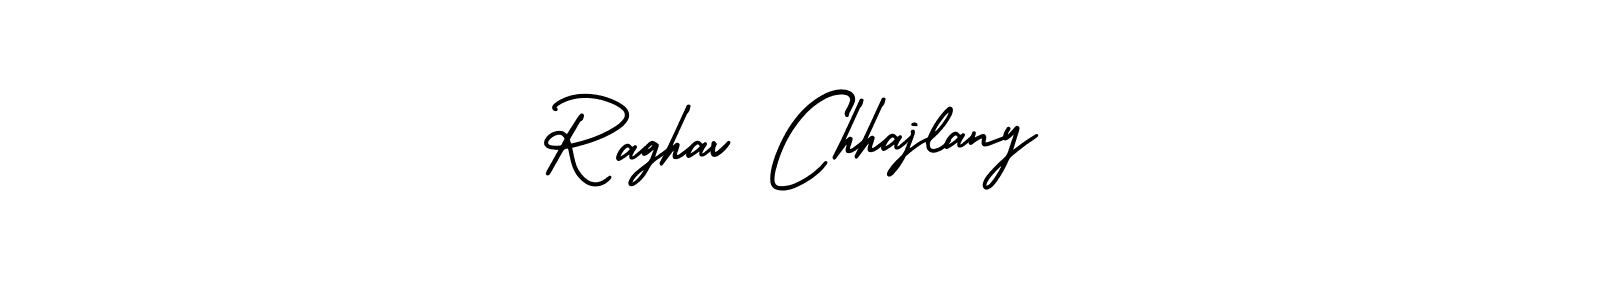 How to Draw Raghav Chhajlany signature style? AmerikaSignatureDemo-Regular is a latest design signature styles for name Raghav Chhajlany. Raghav Chhajlany signature style 3 images and pictures png